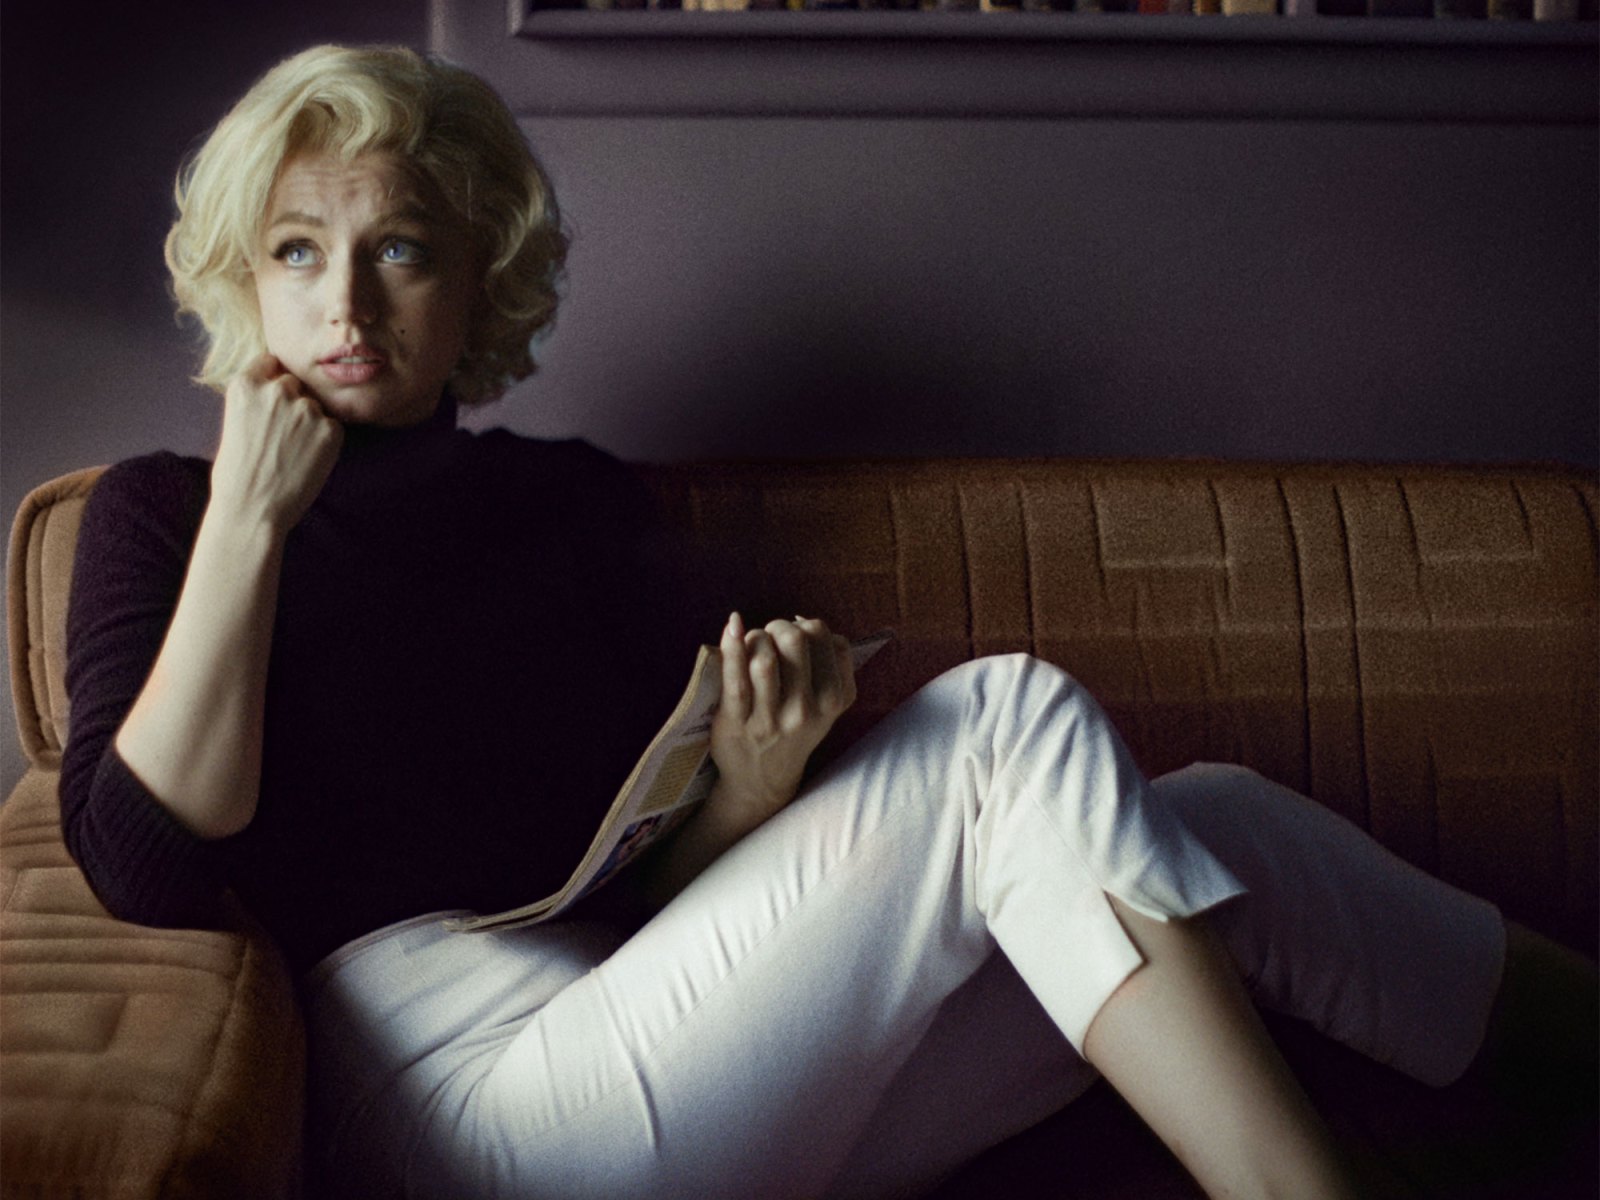 Stunning! ‘Blonde’ Trailer Offers 1st Look at Ana de Armas as Marilyn Monroe